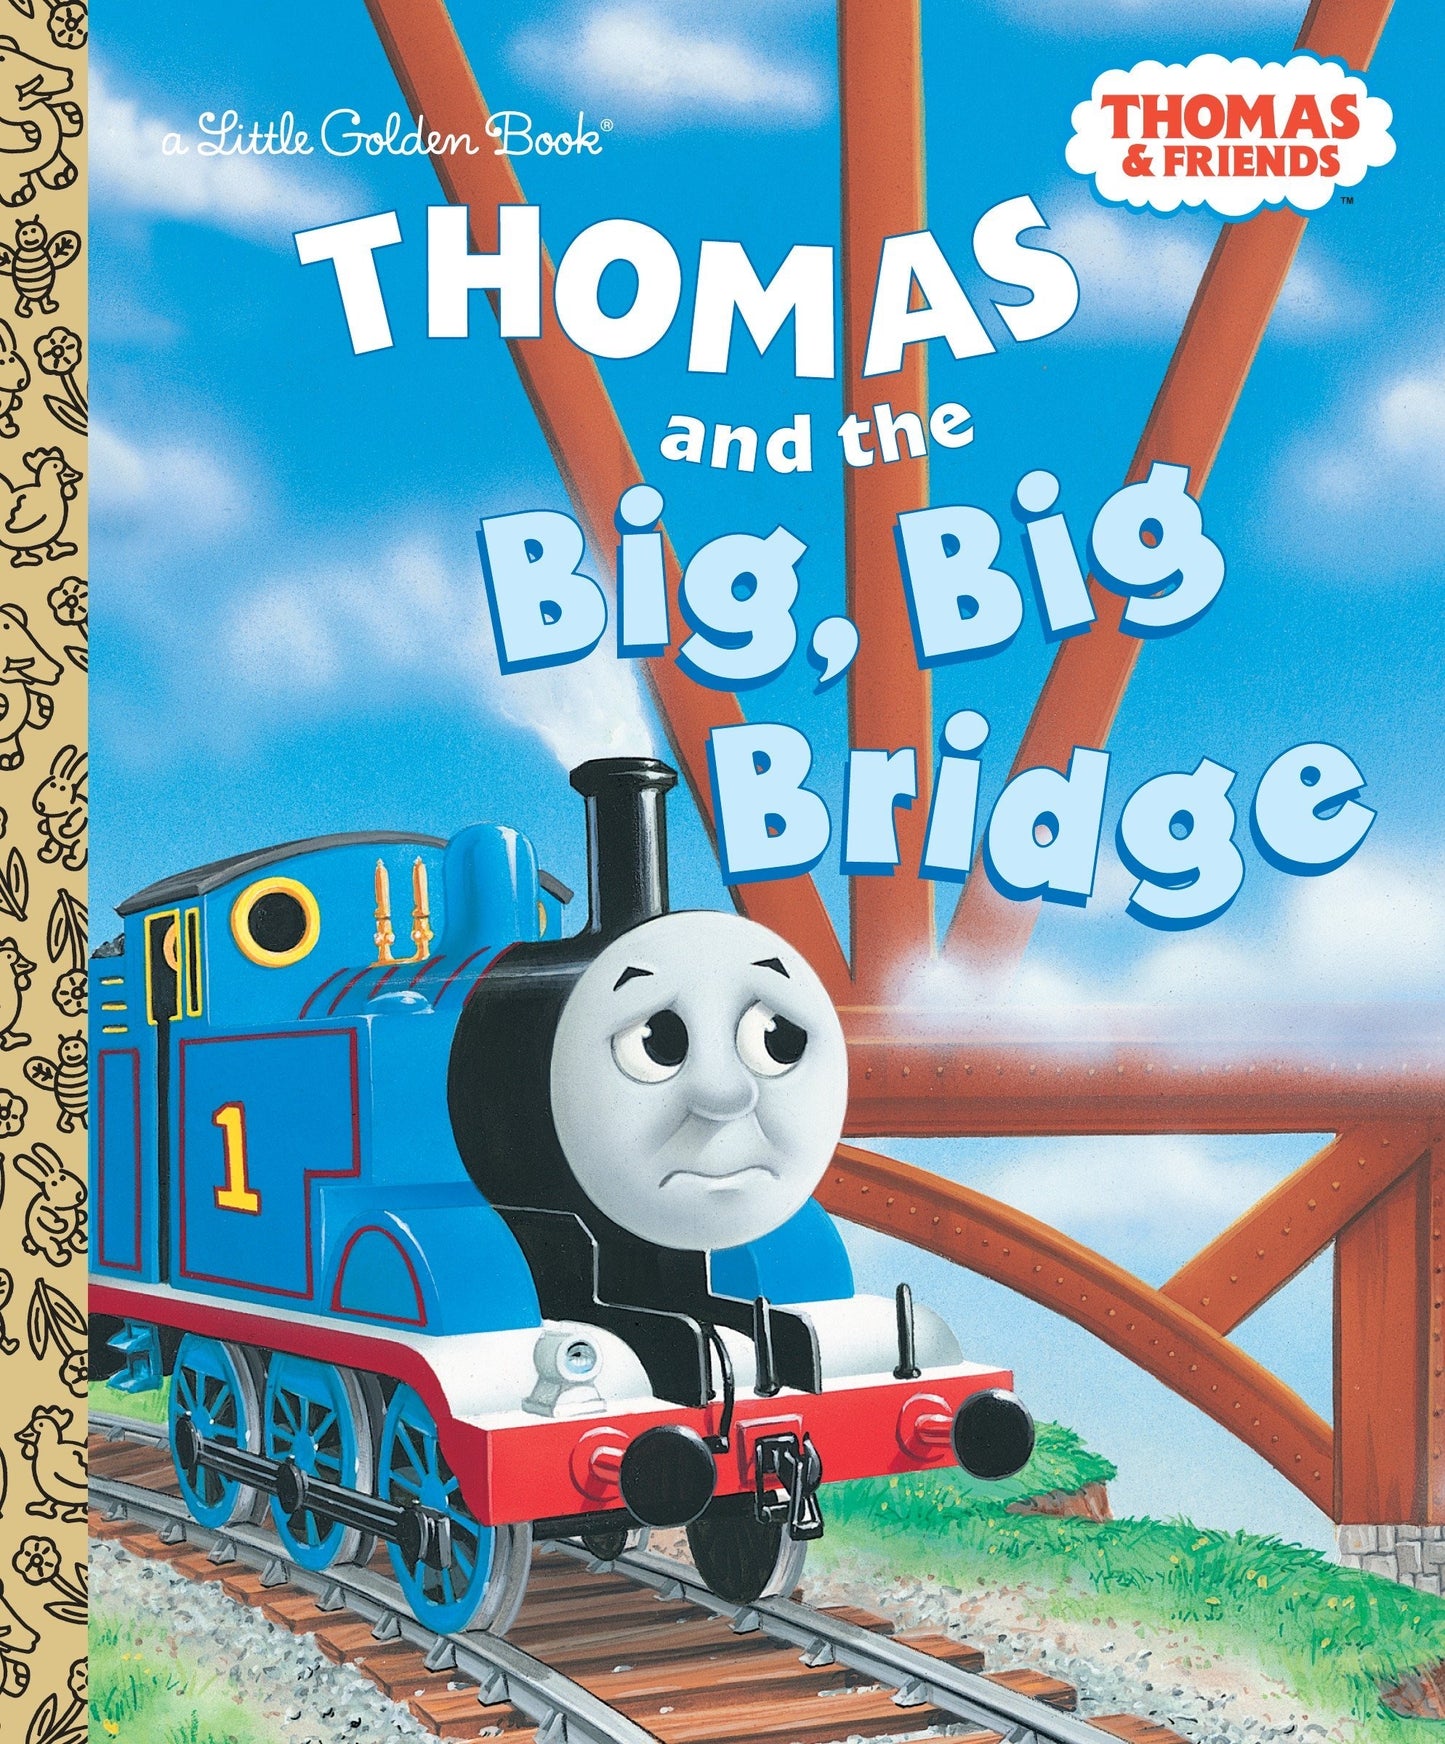 Little Golden Book Thomas and the Big, Big Bridge